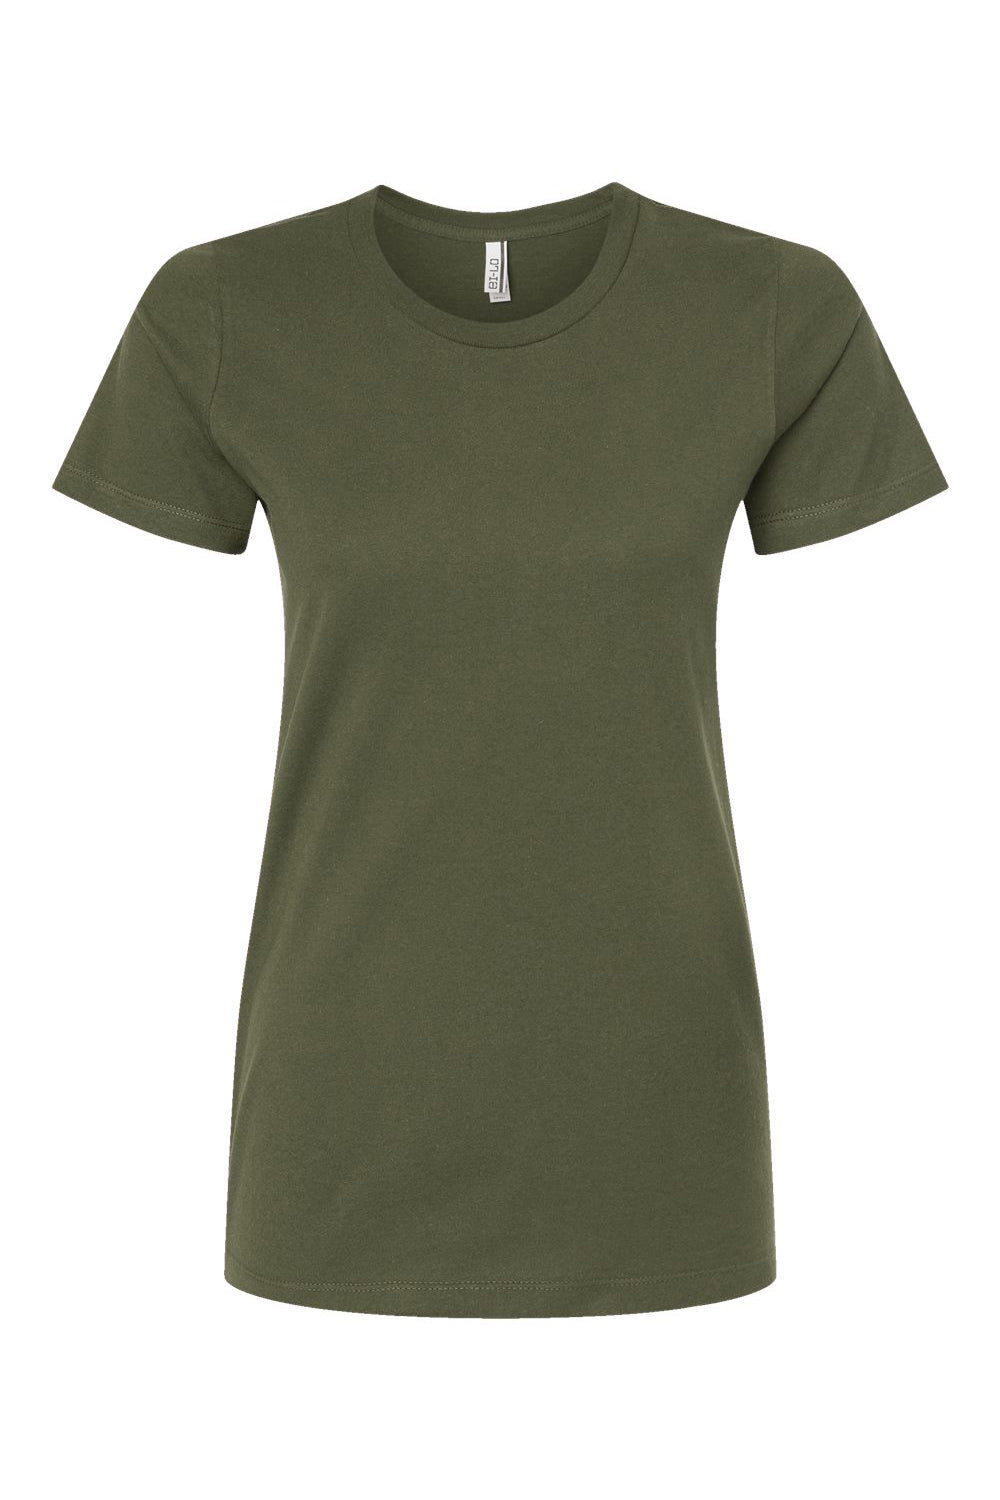 Tultex 516 Womens Premium Short Sleeve Crewneck T-Shirt Olive Green Flat Front